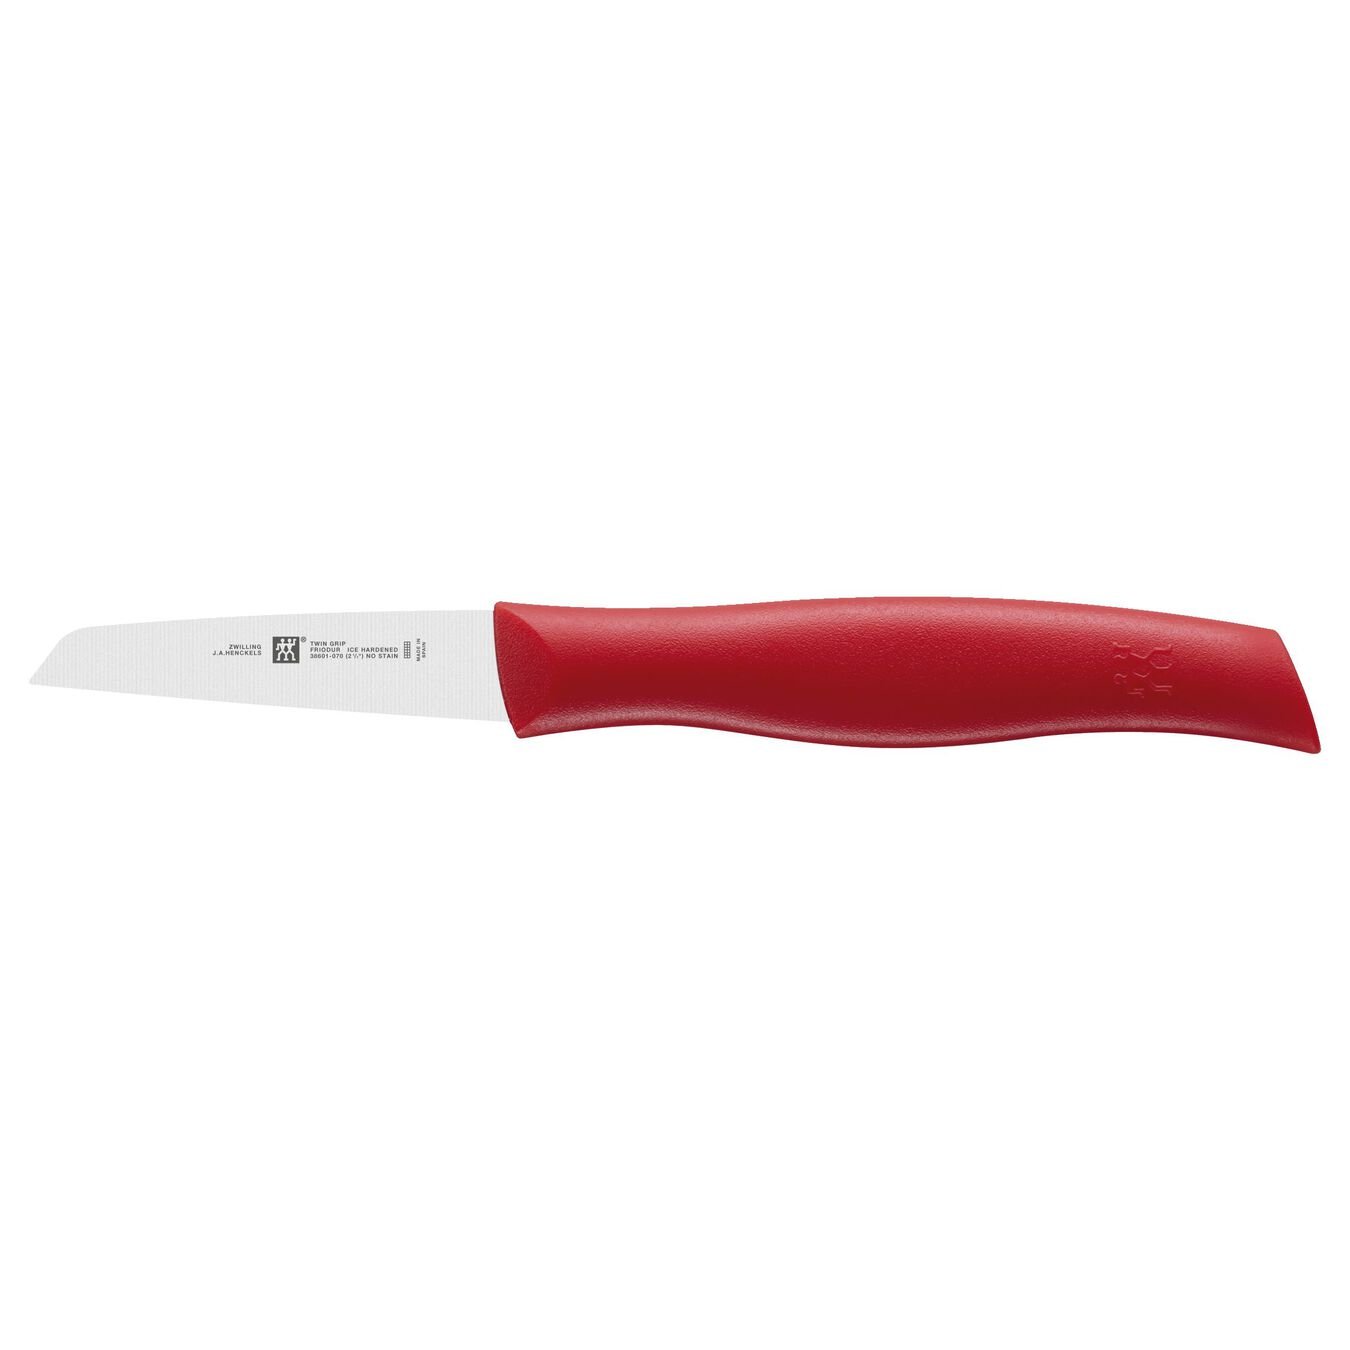 Grøntsagskniv 7 cm, Red,,large 2